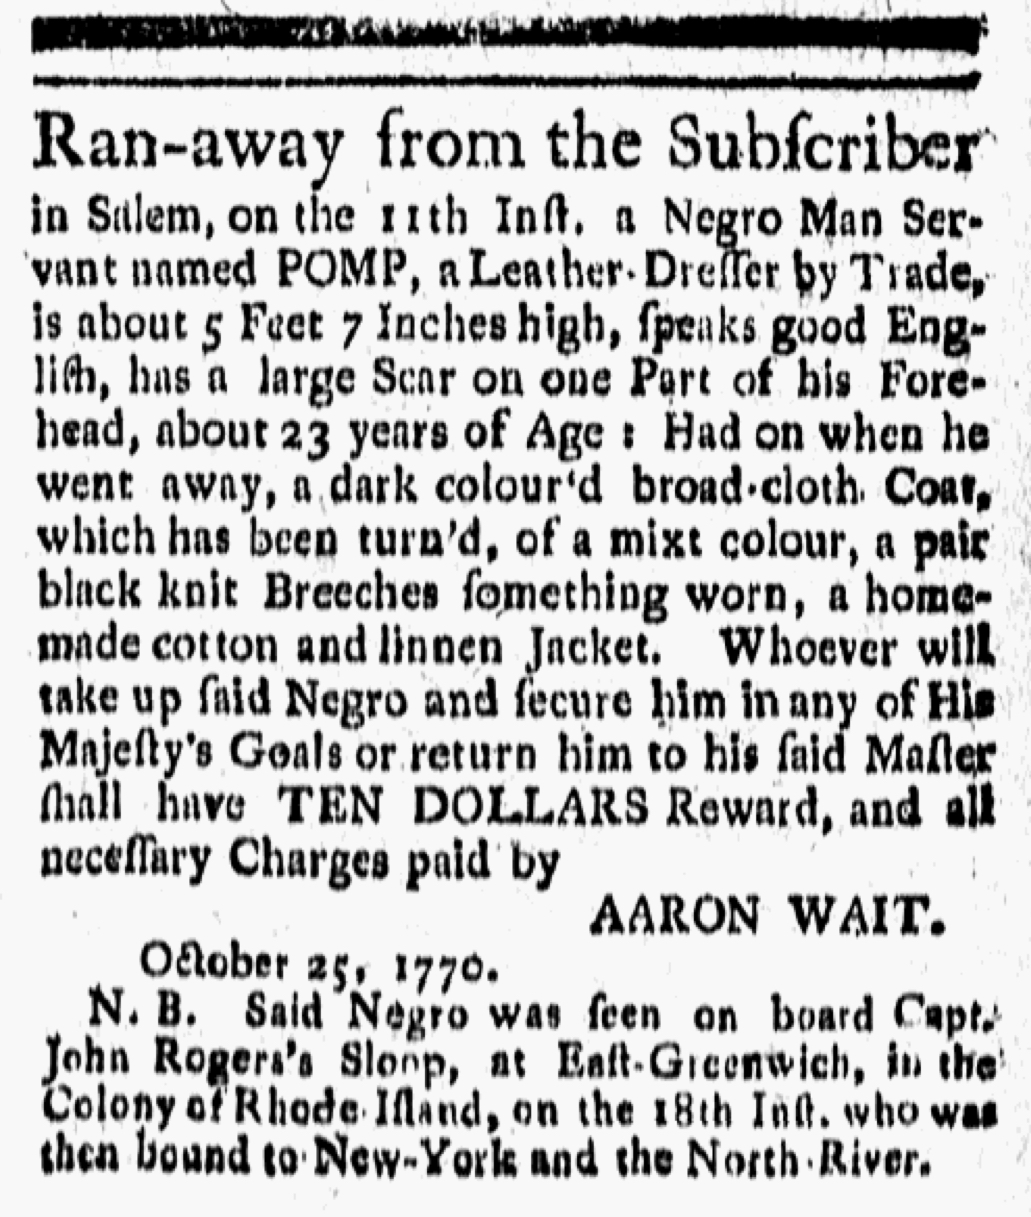 Slavery Advertisements Published November 23 1770 The Adverts 250